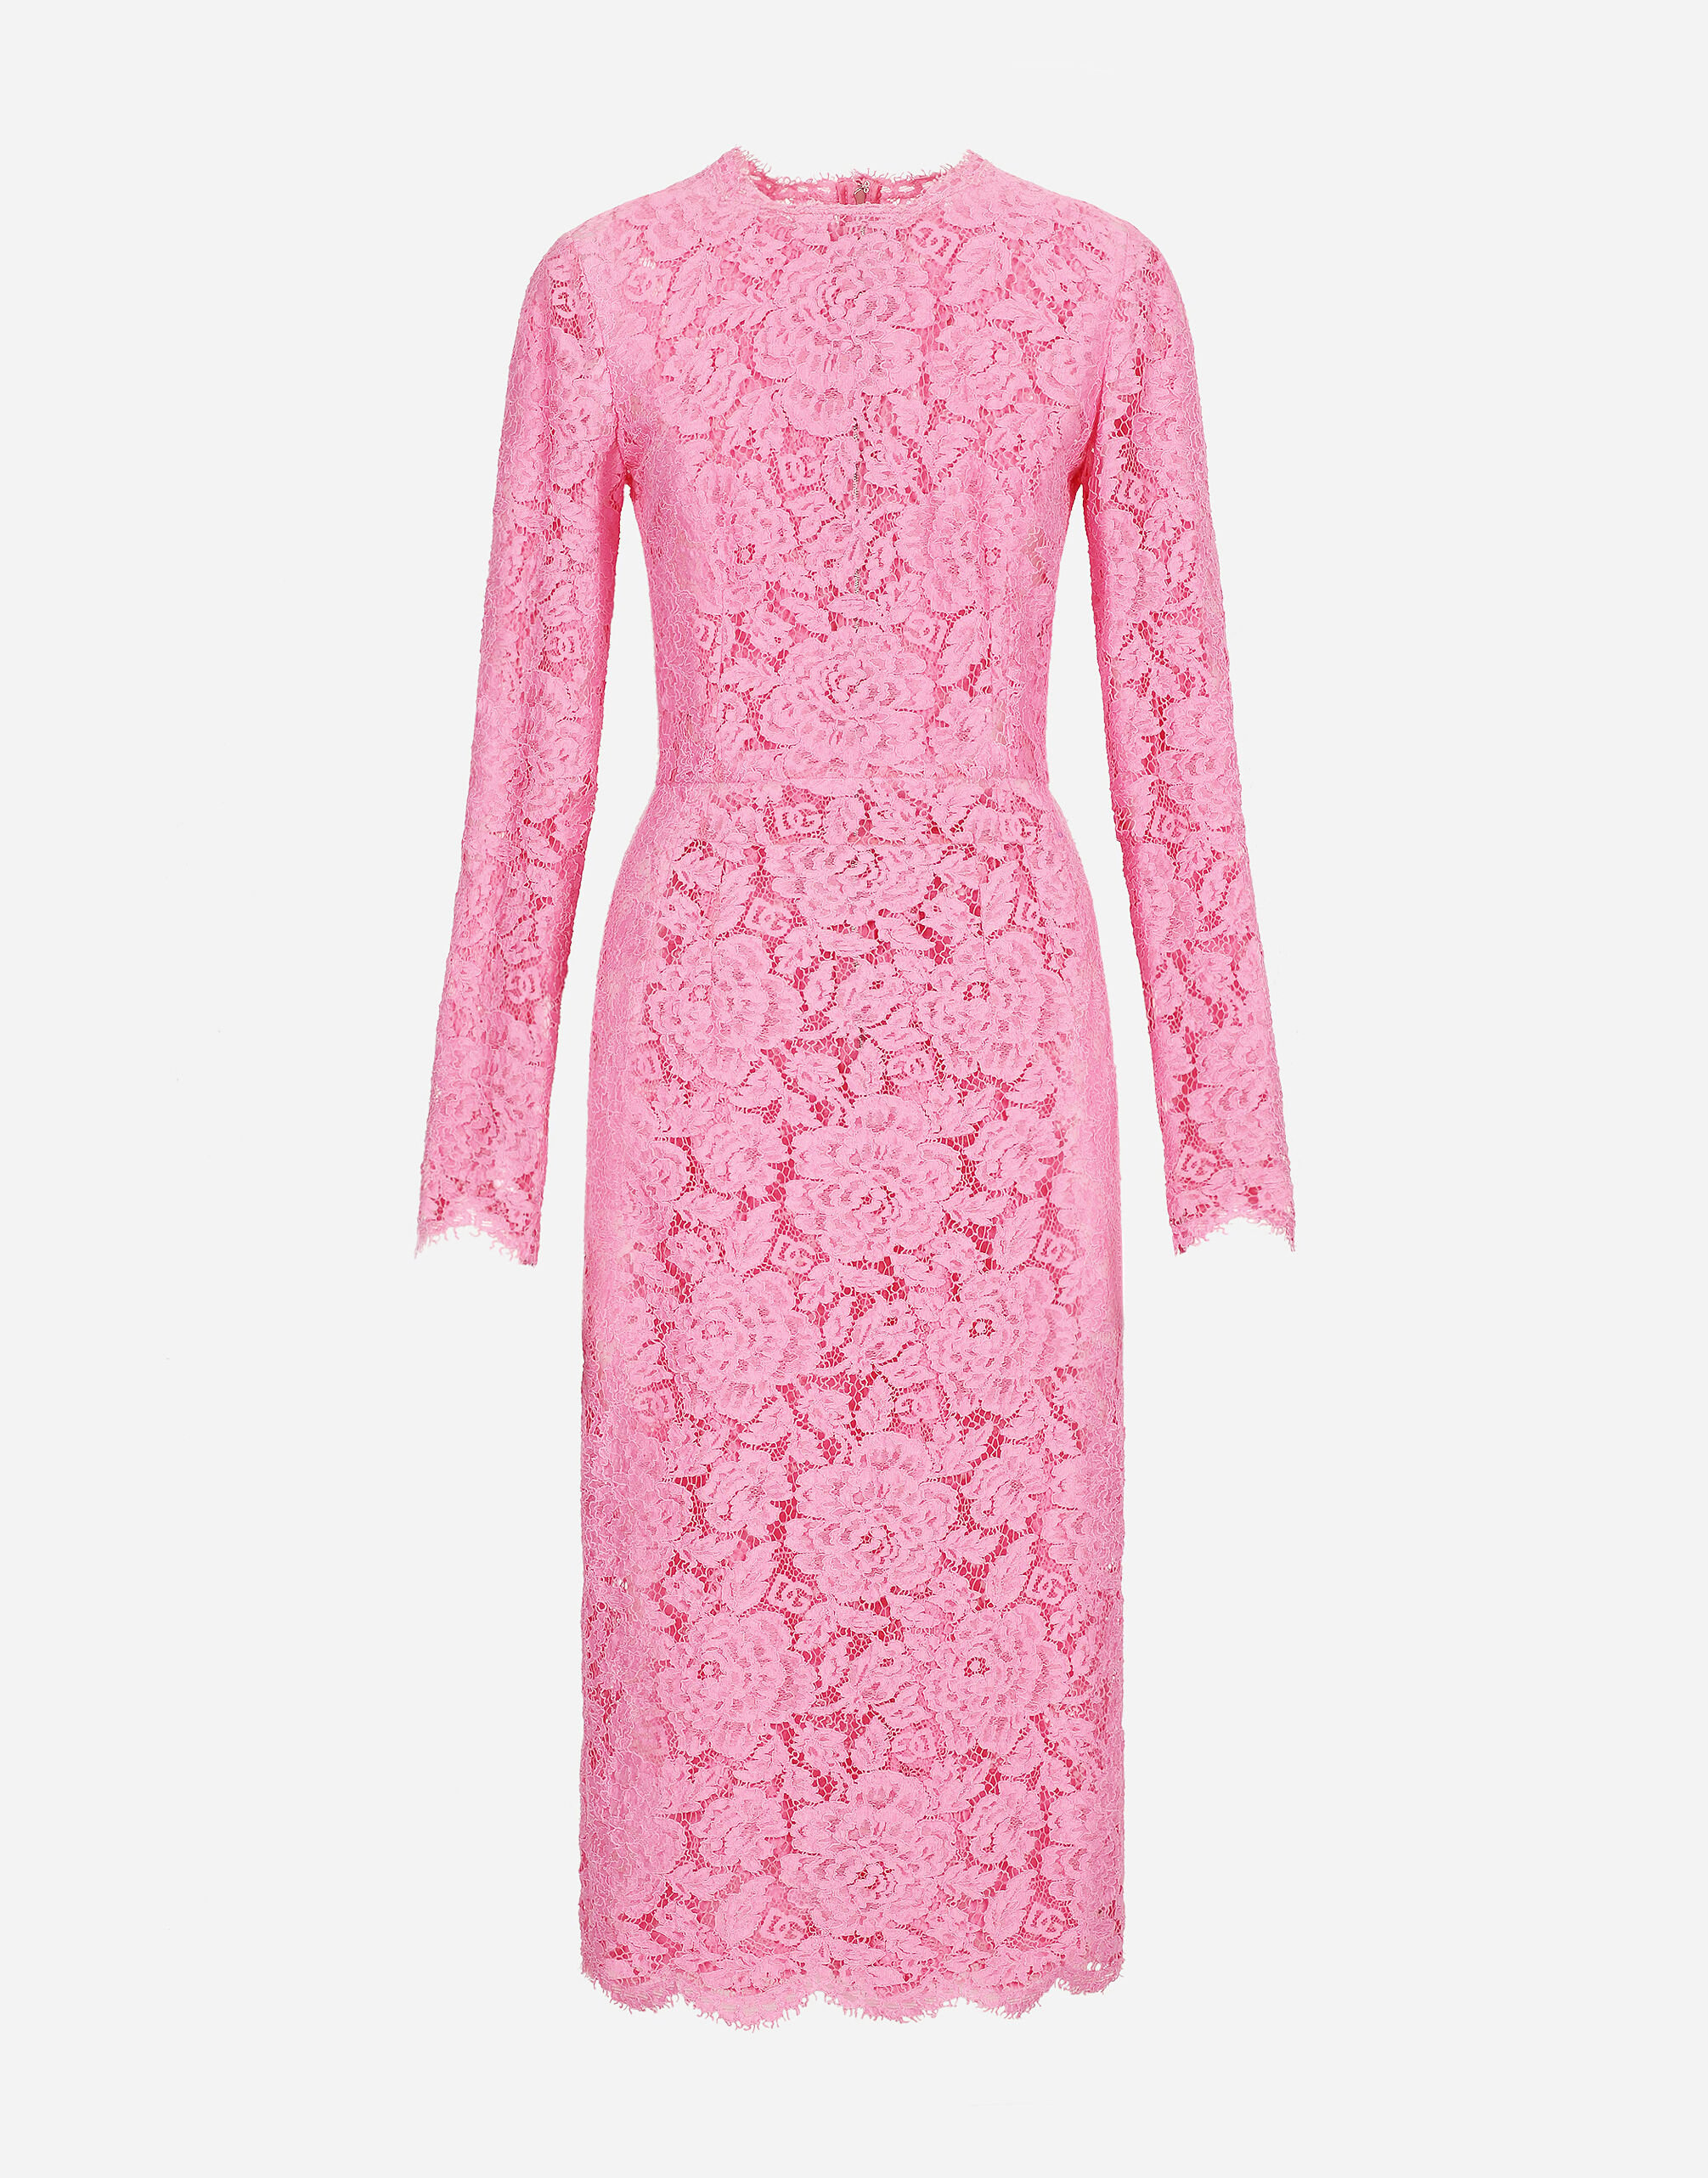 Dolce & Gabbana Branded floral cordonetto lace sheath dress Pink F79DATFMMHN